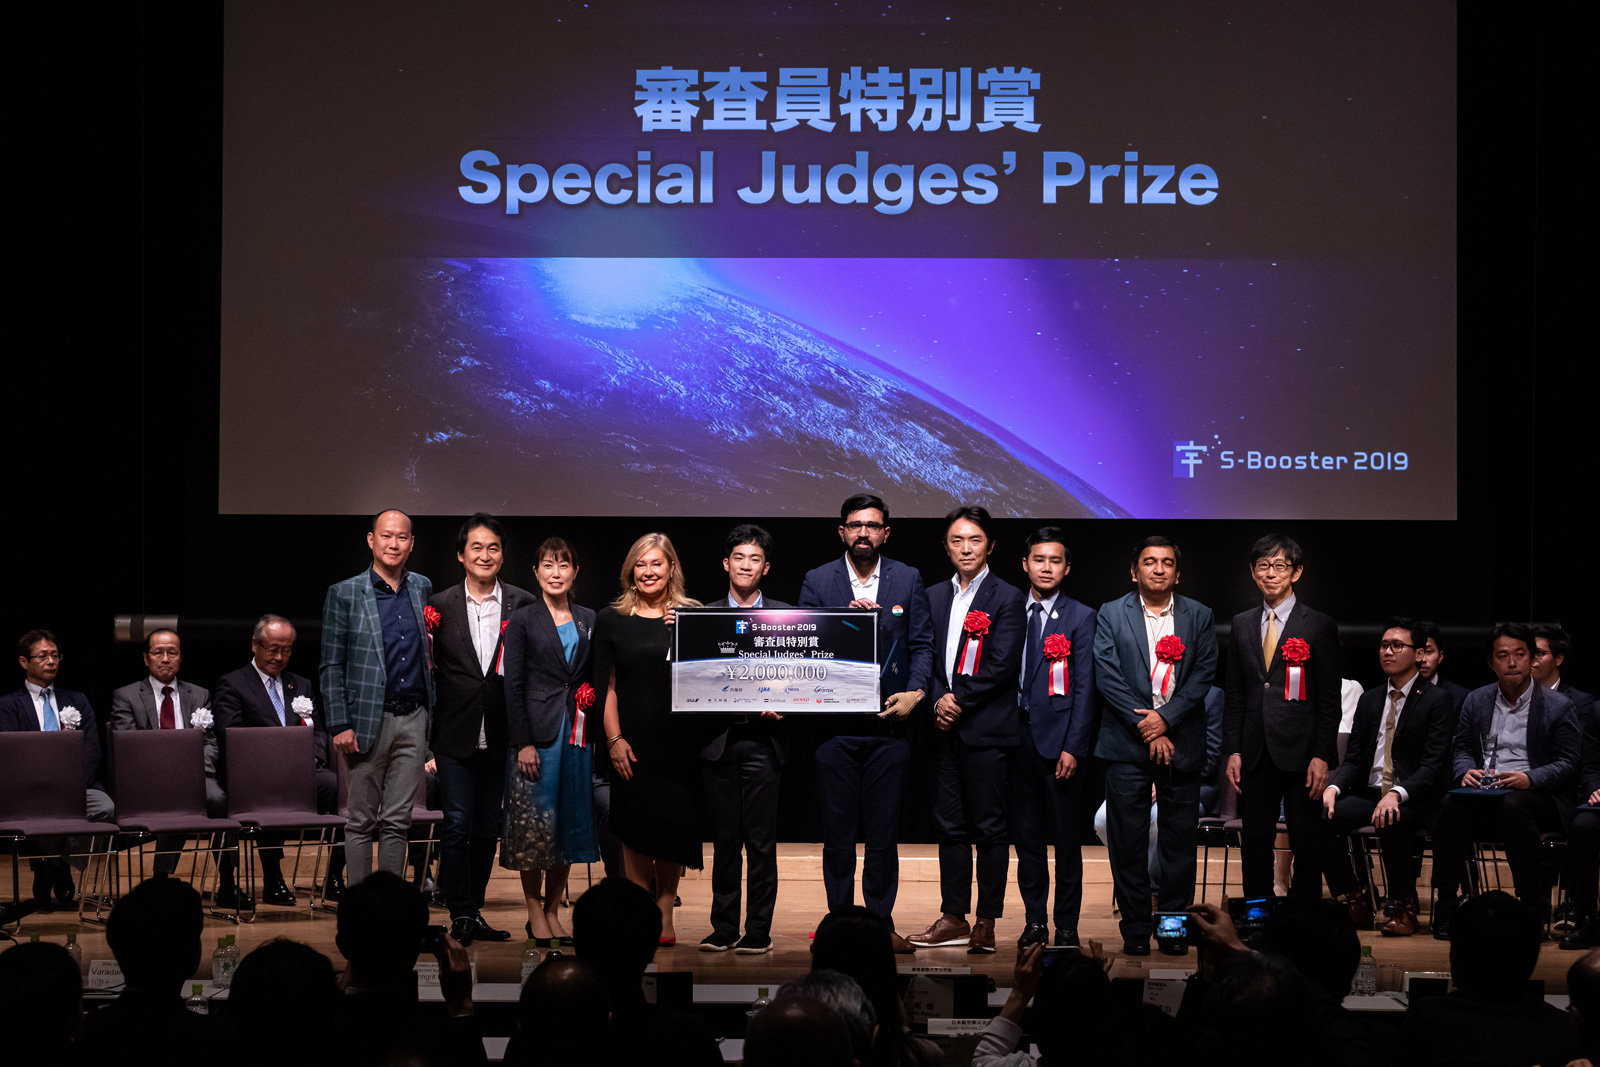 Special Judges' Prize